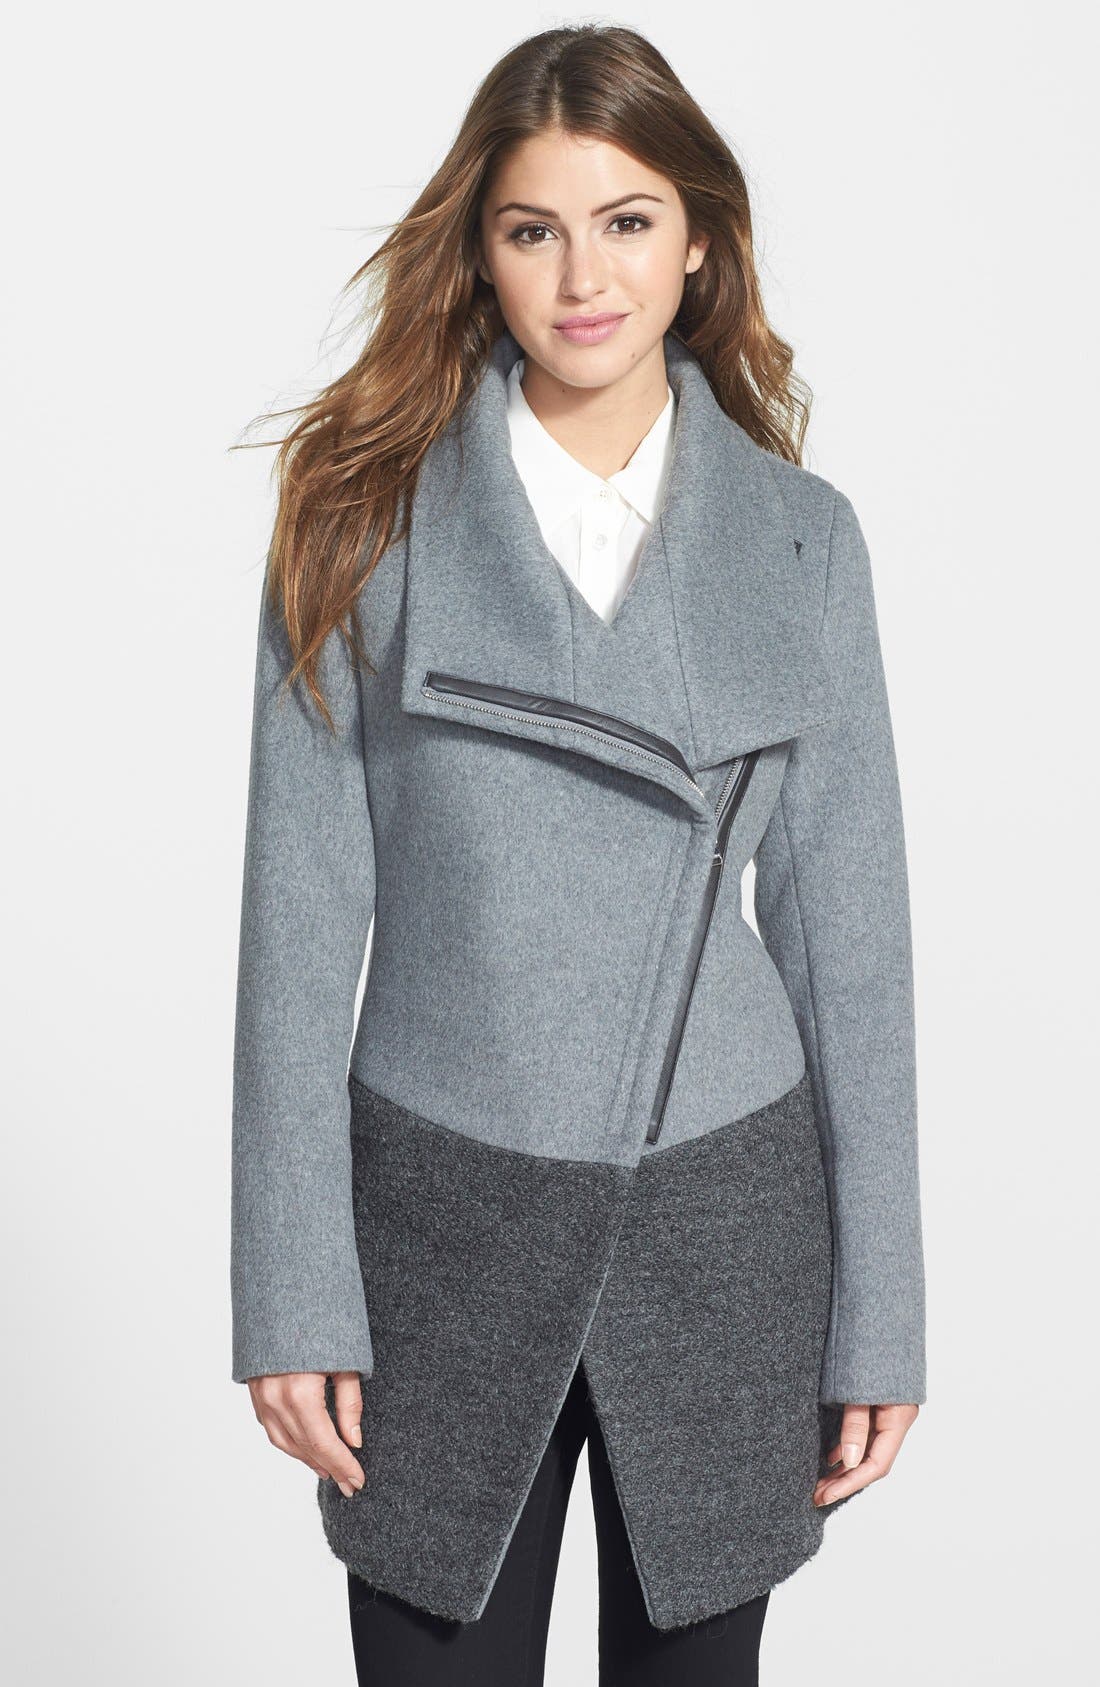 calvin klein asymmetrical wool coat